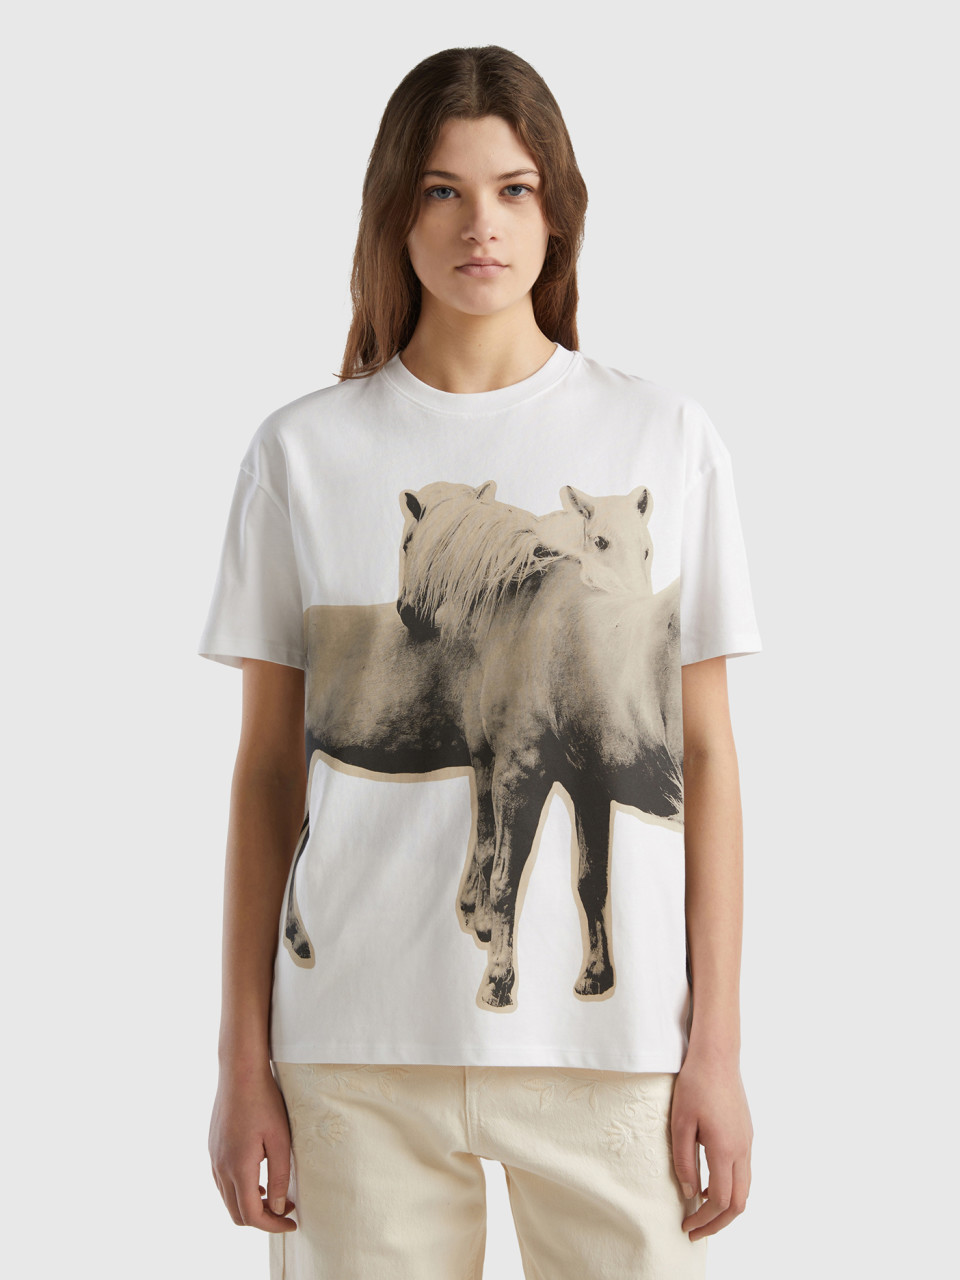 Benetton, Warm T-shirt With Horse Print, White, Women